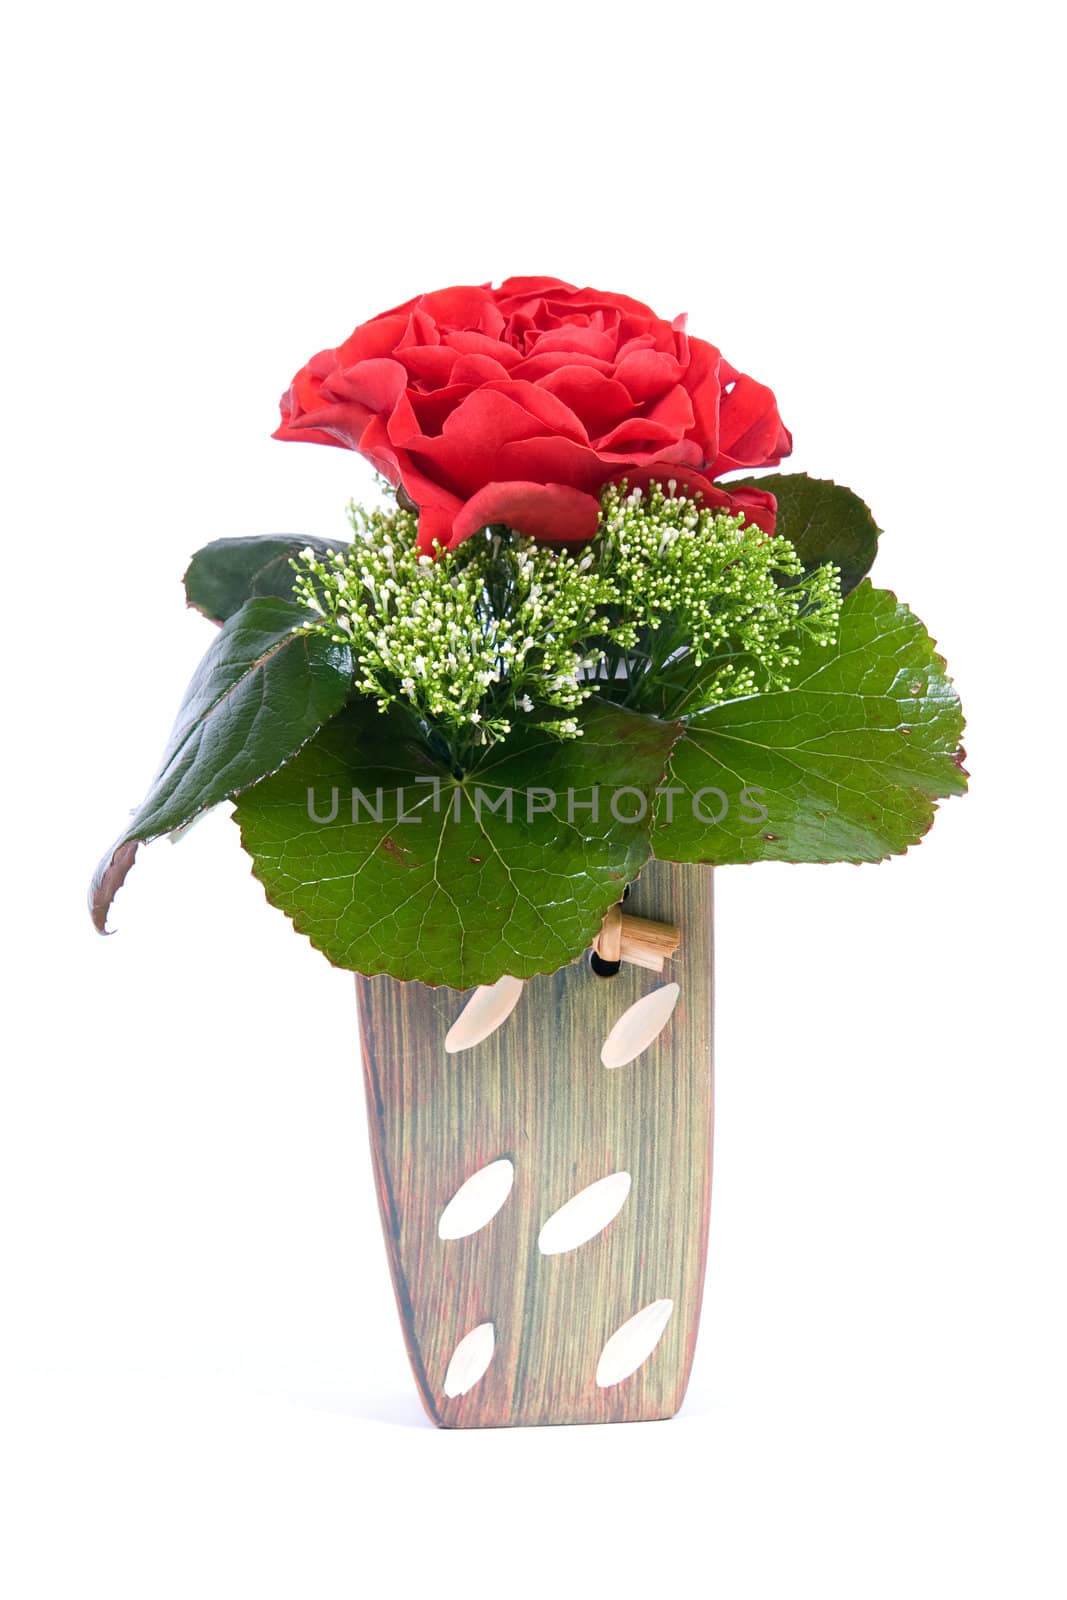 Arrangement with red rose in flower vase